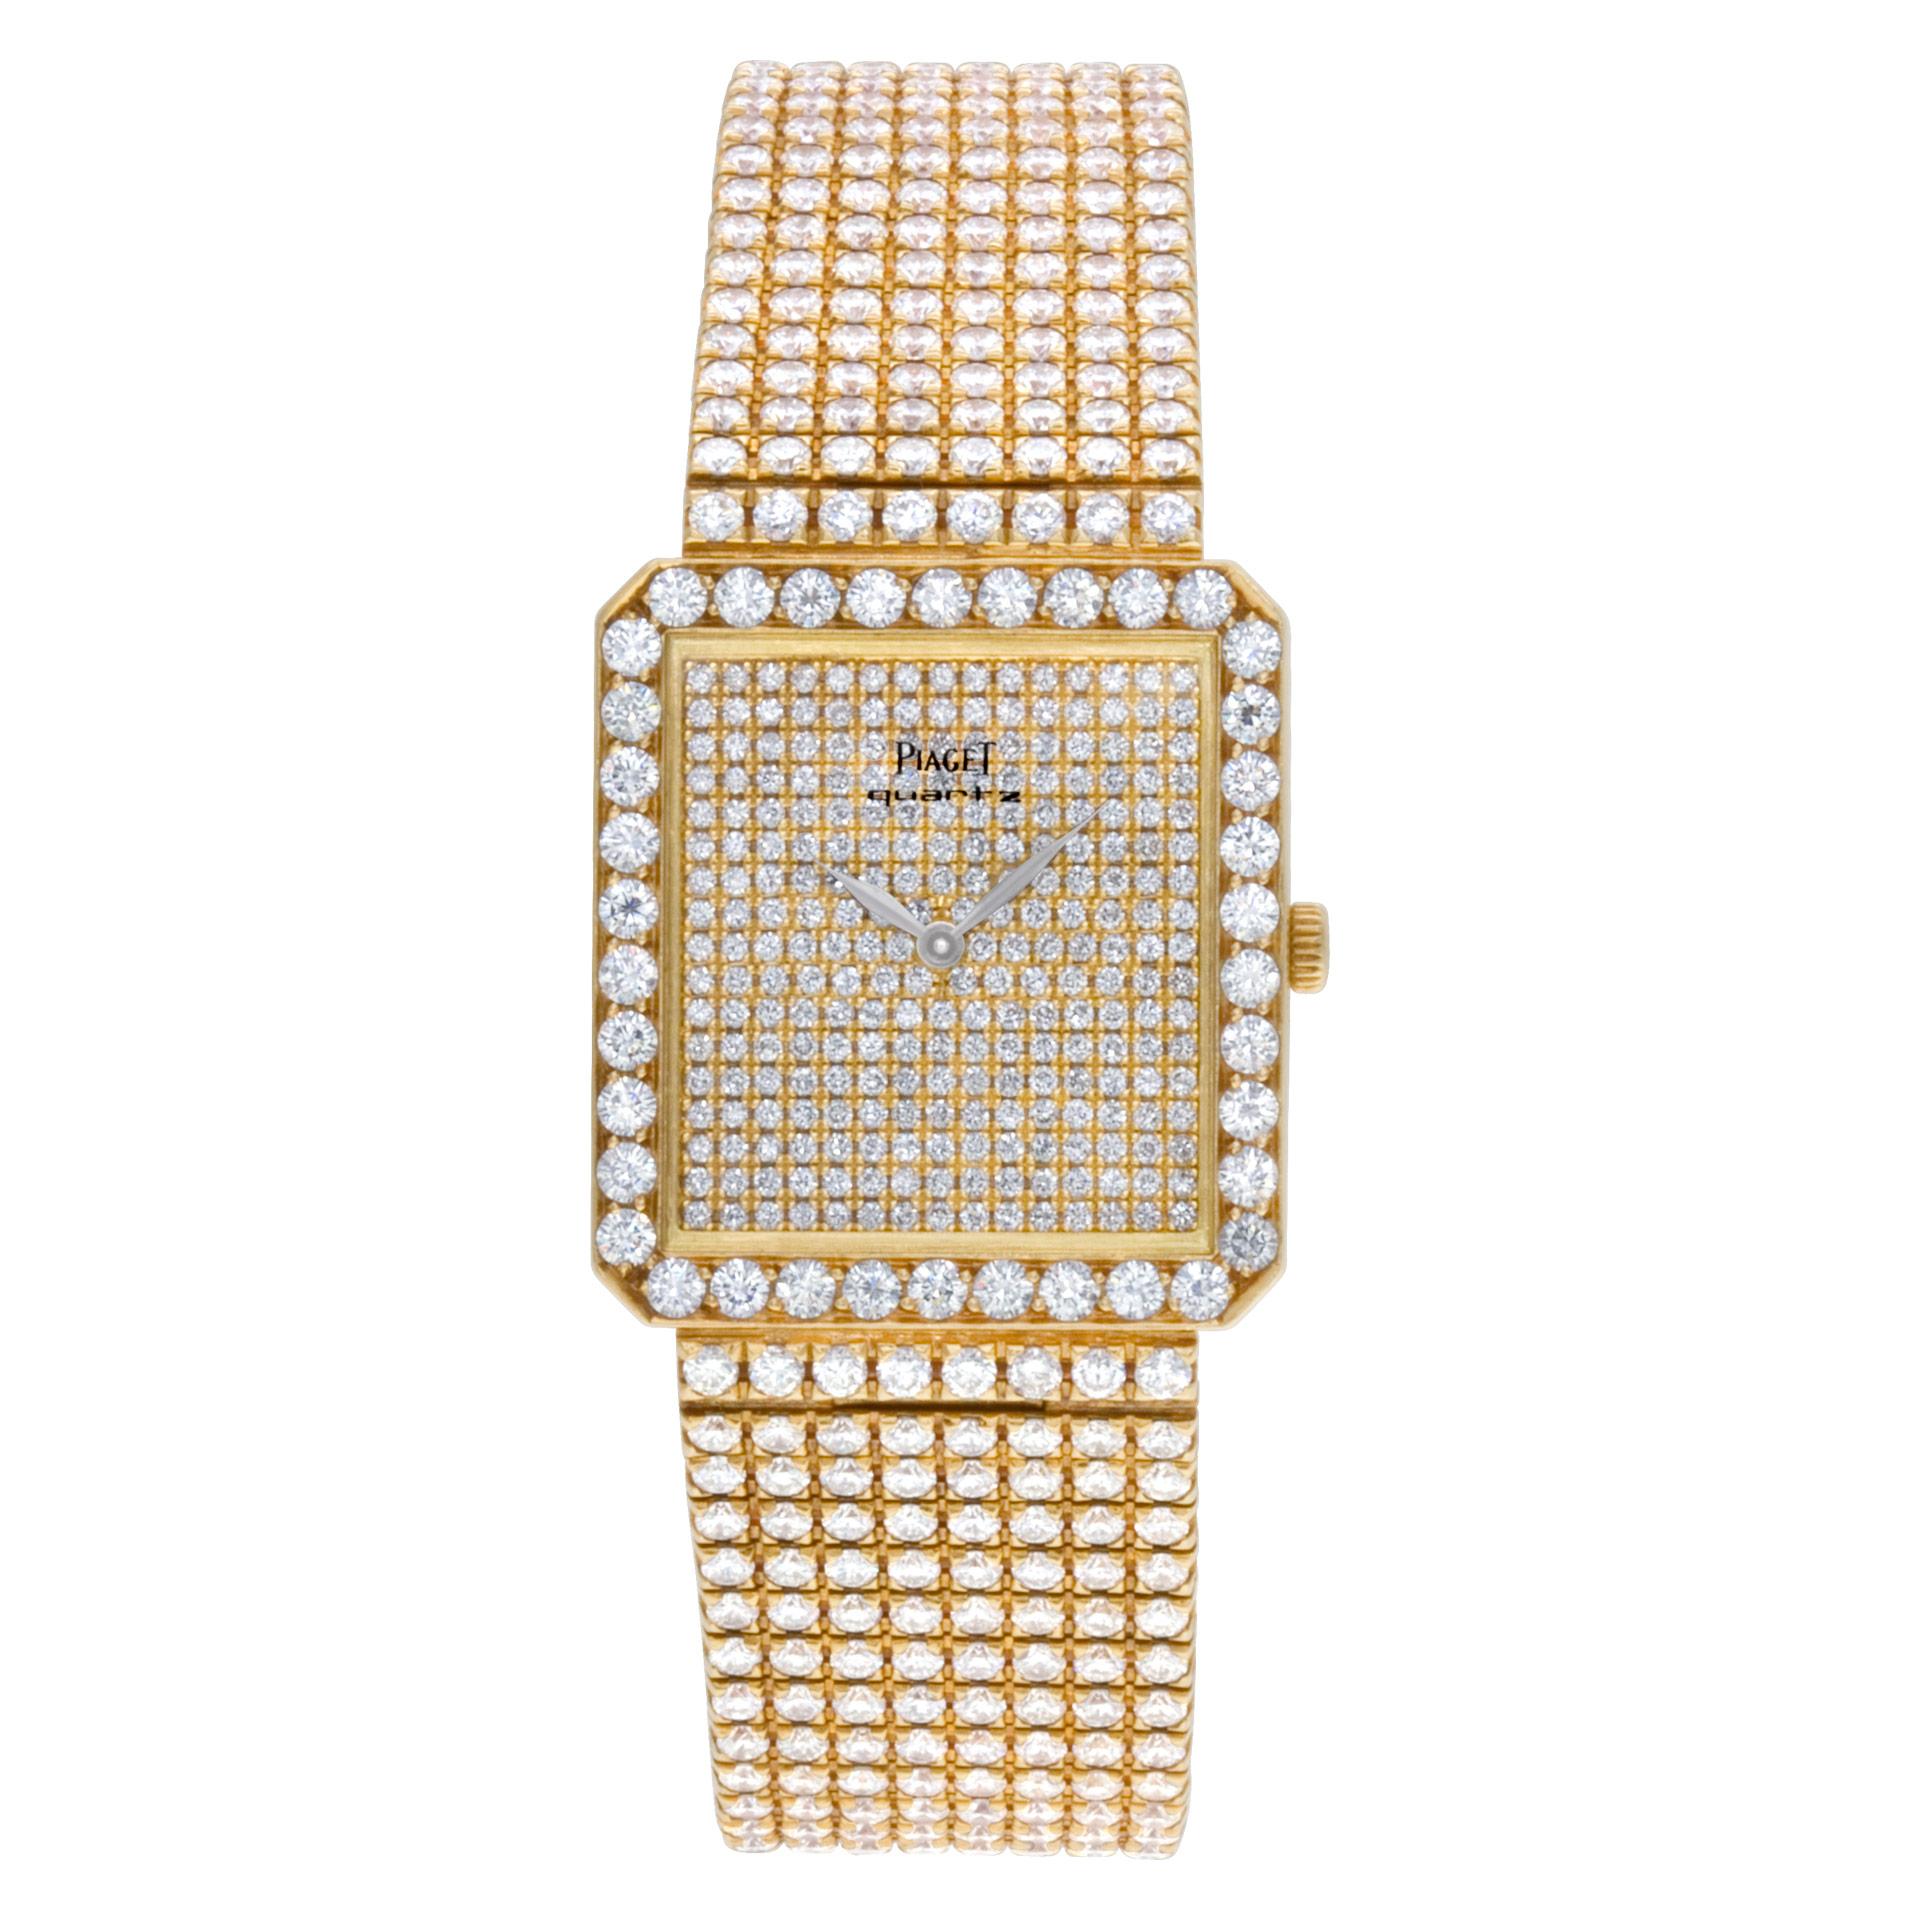 Modern Piaget Classic 81541c626 18k with Original Pave Diamonds Quartz Watch